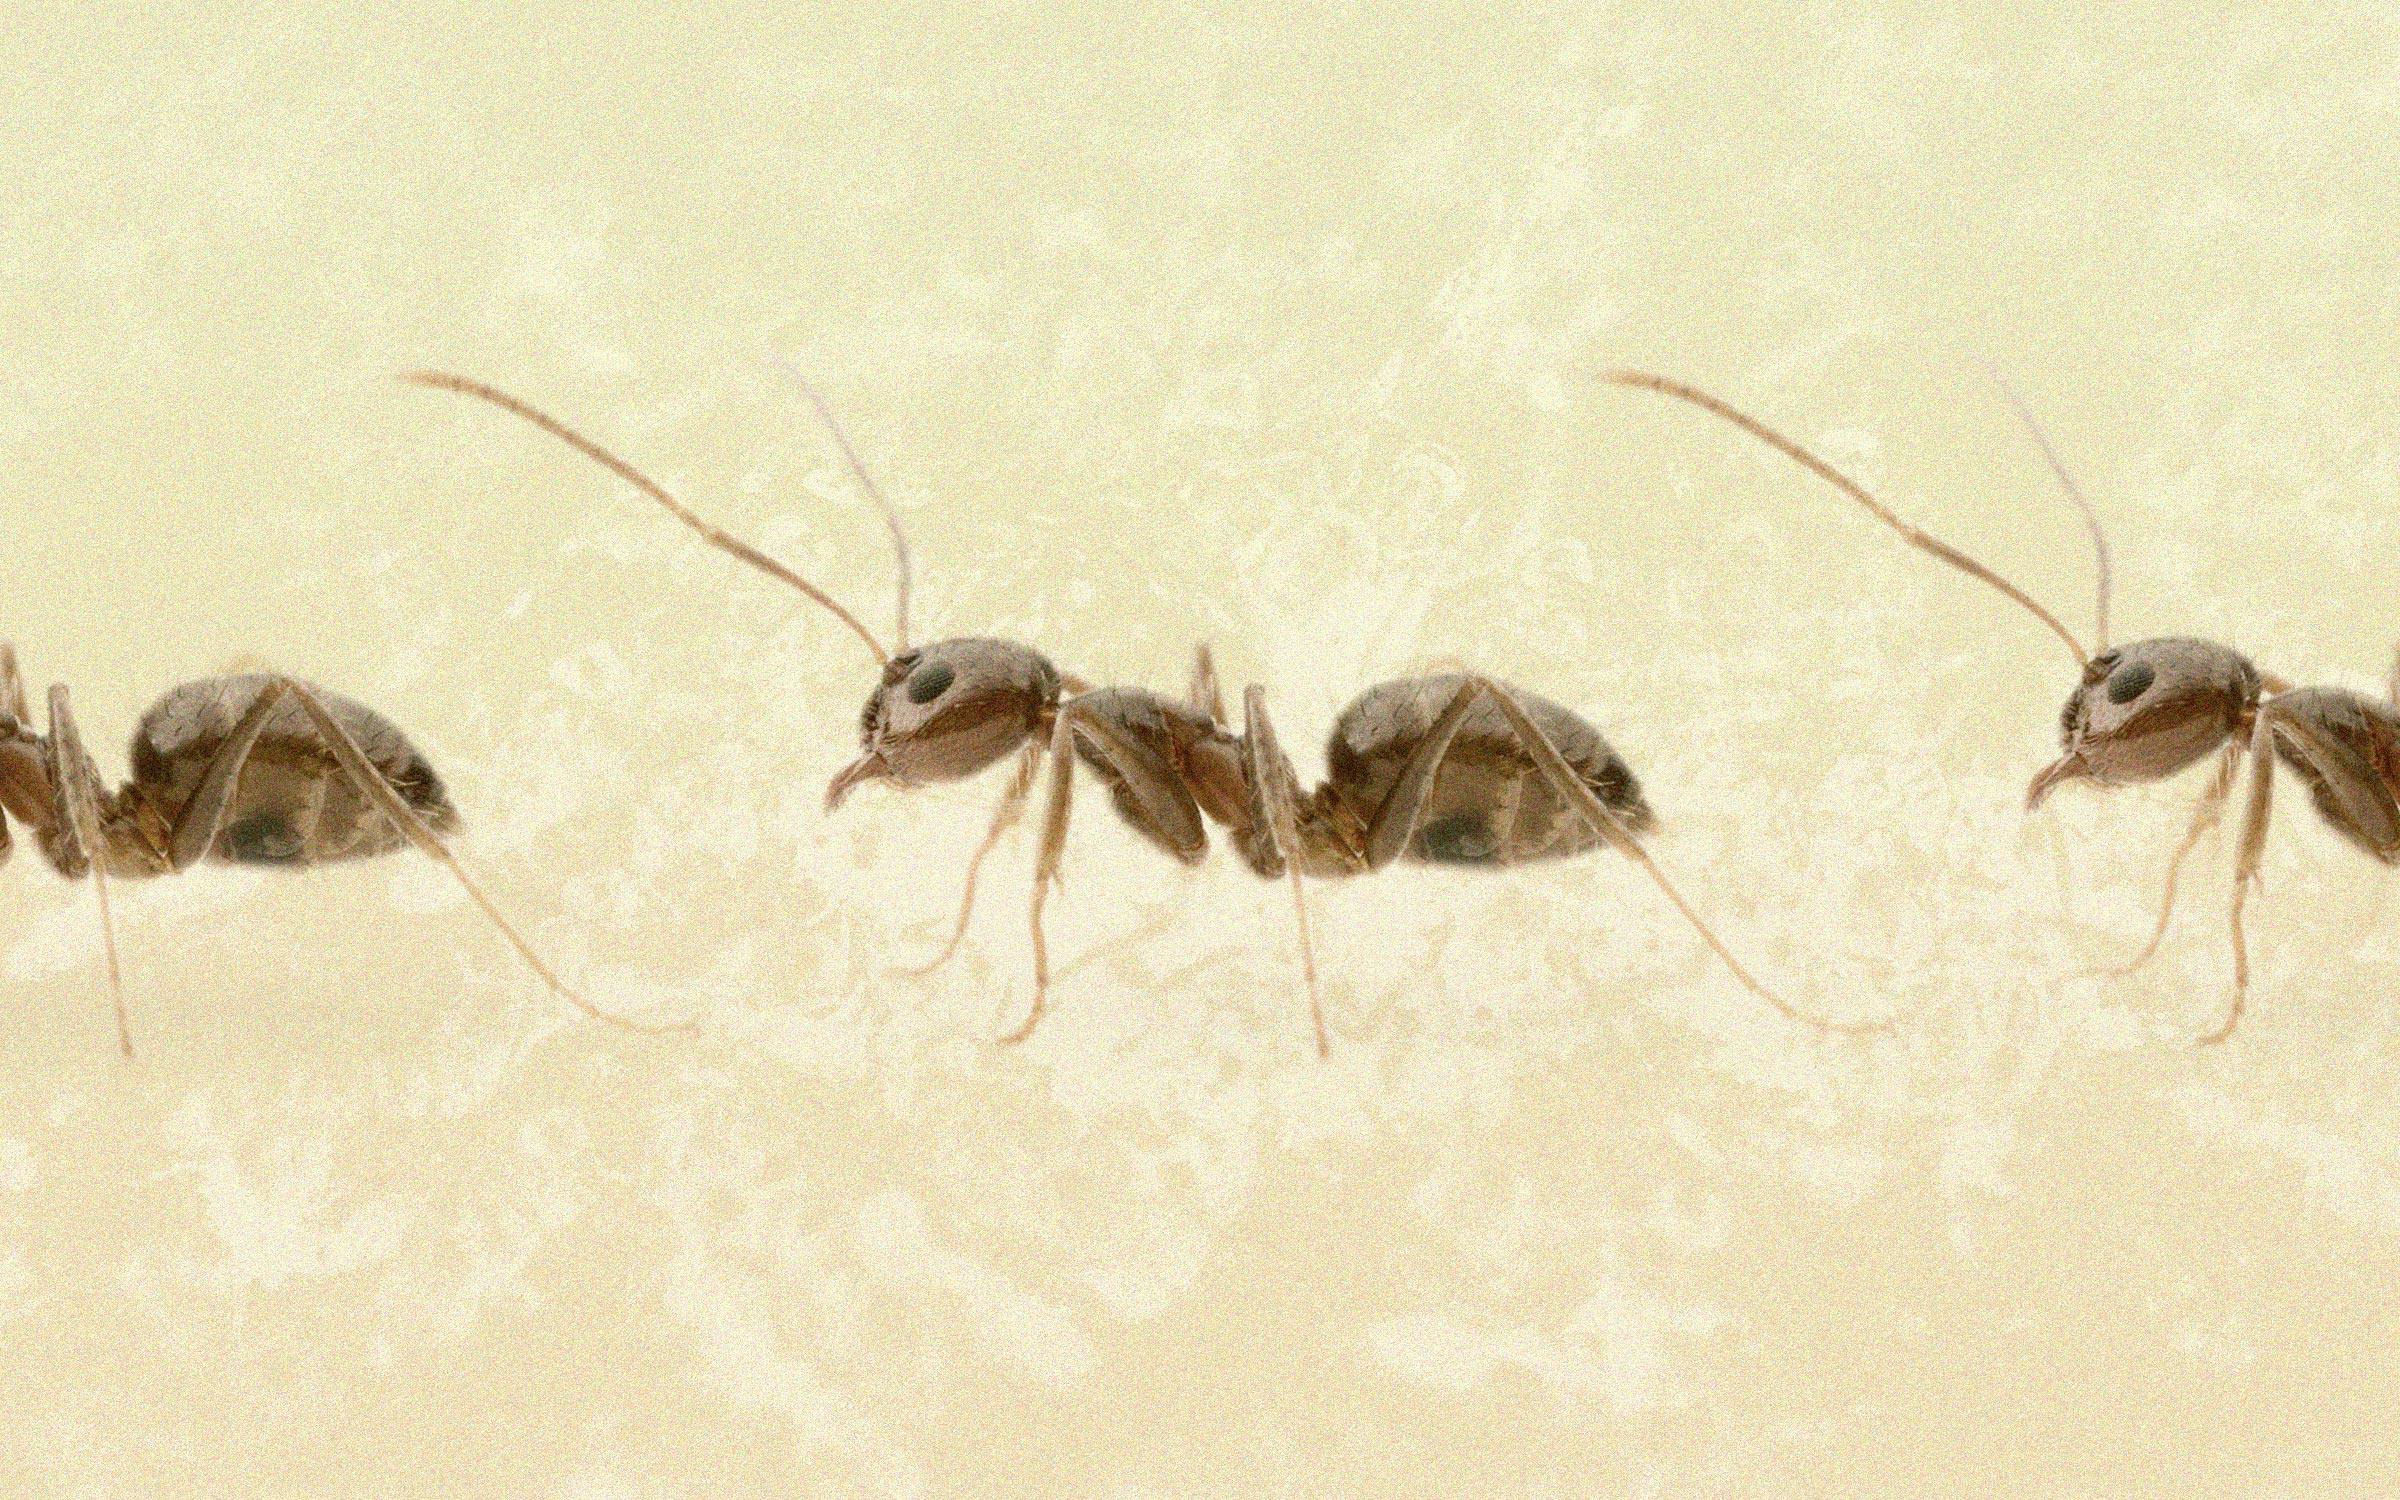 Get Rid of Rasberry Crazy Ants: Tawny Crazy Ant Control